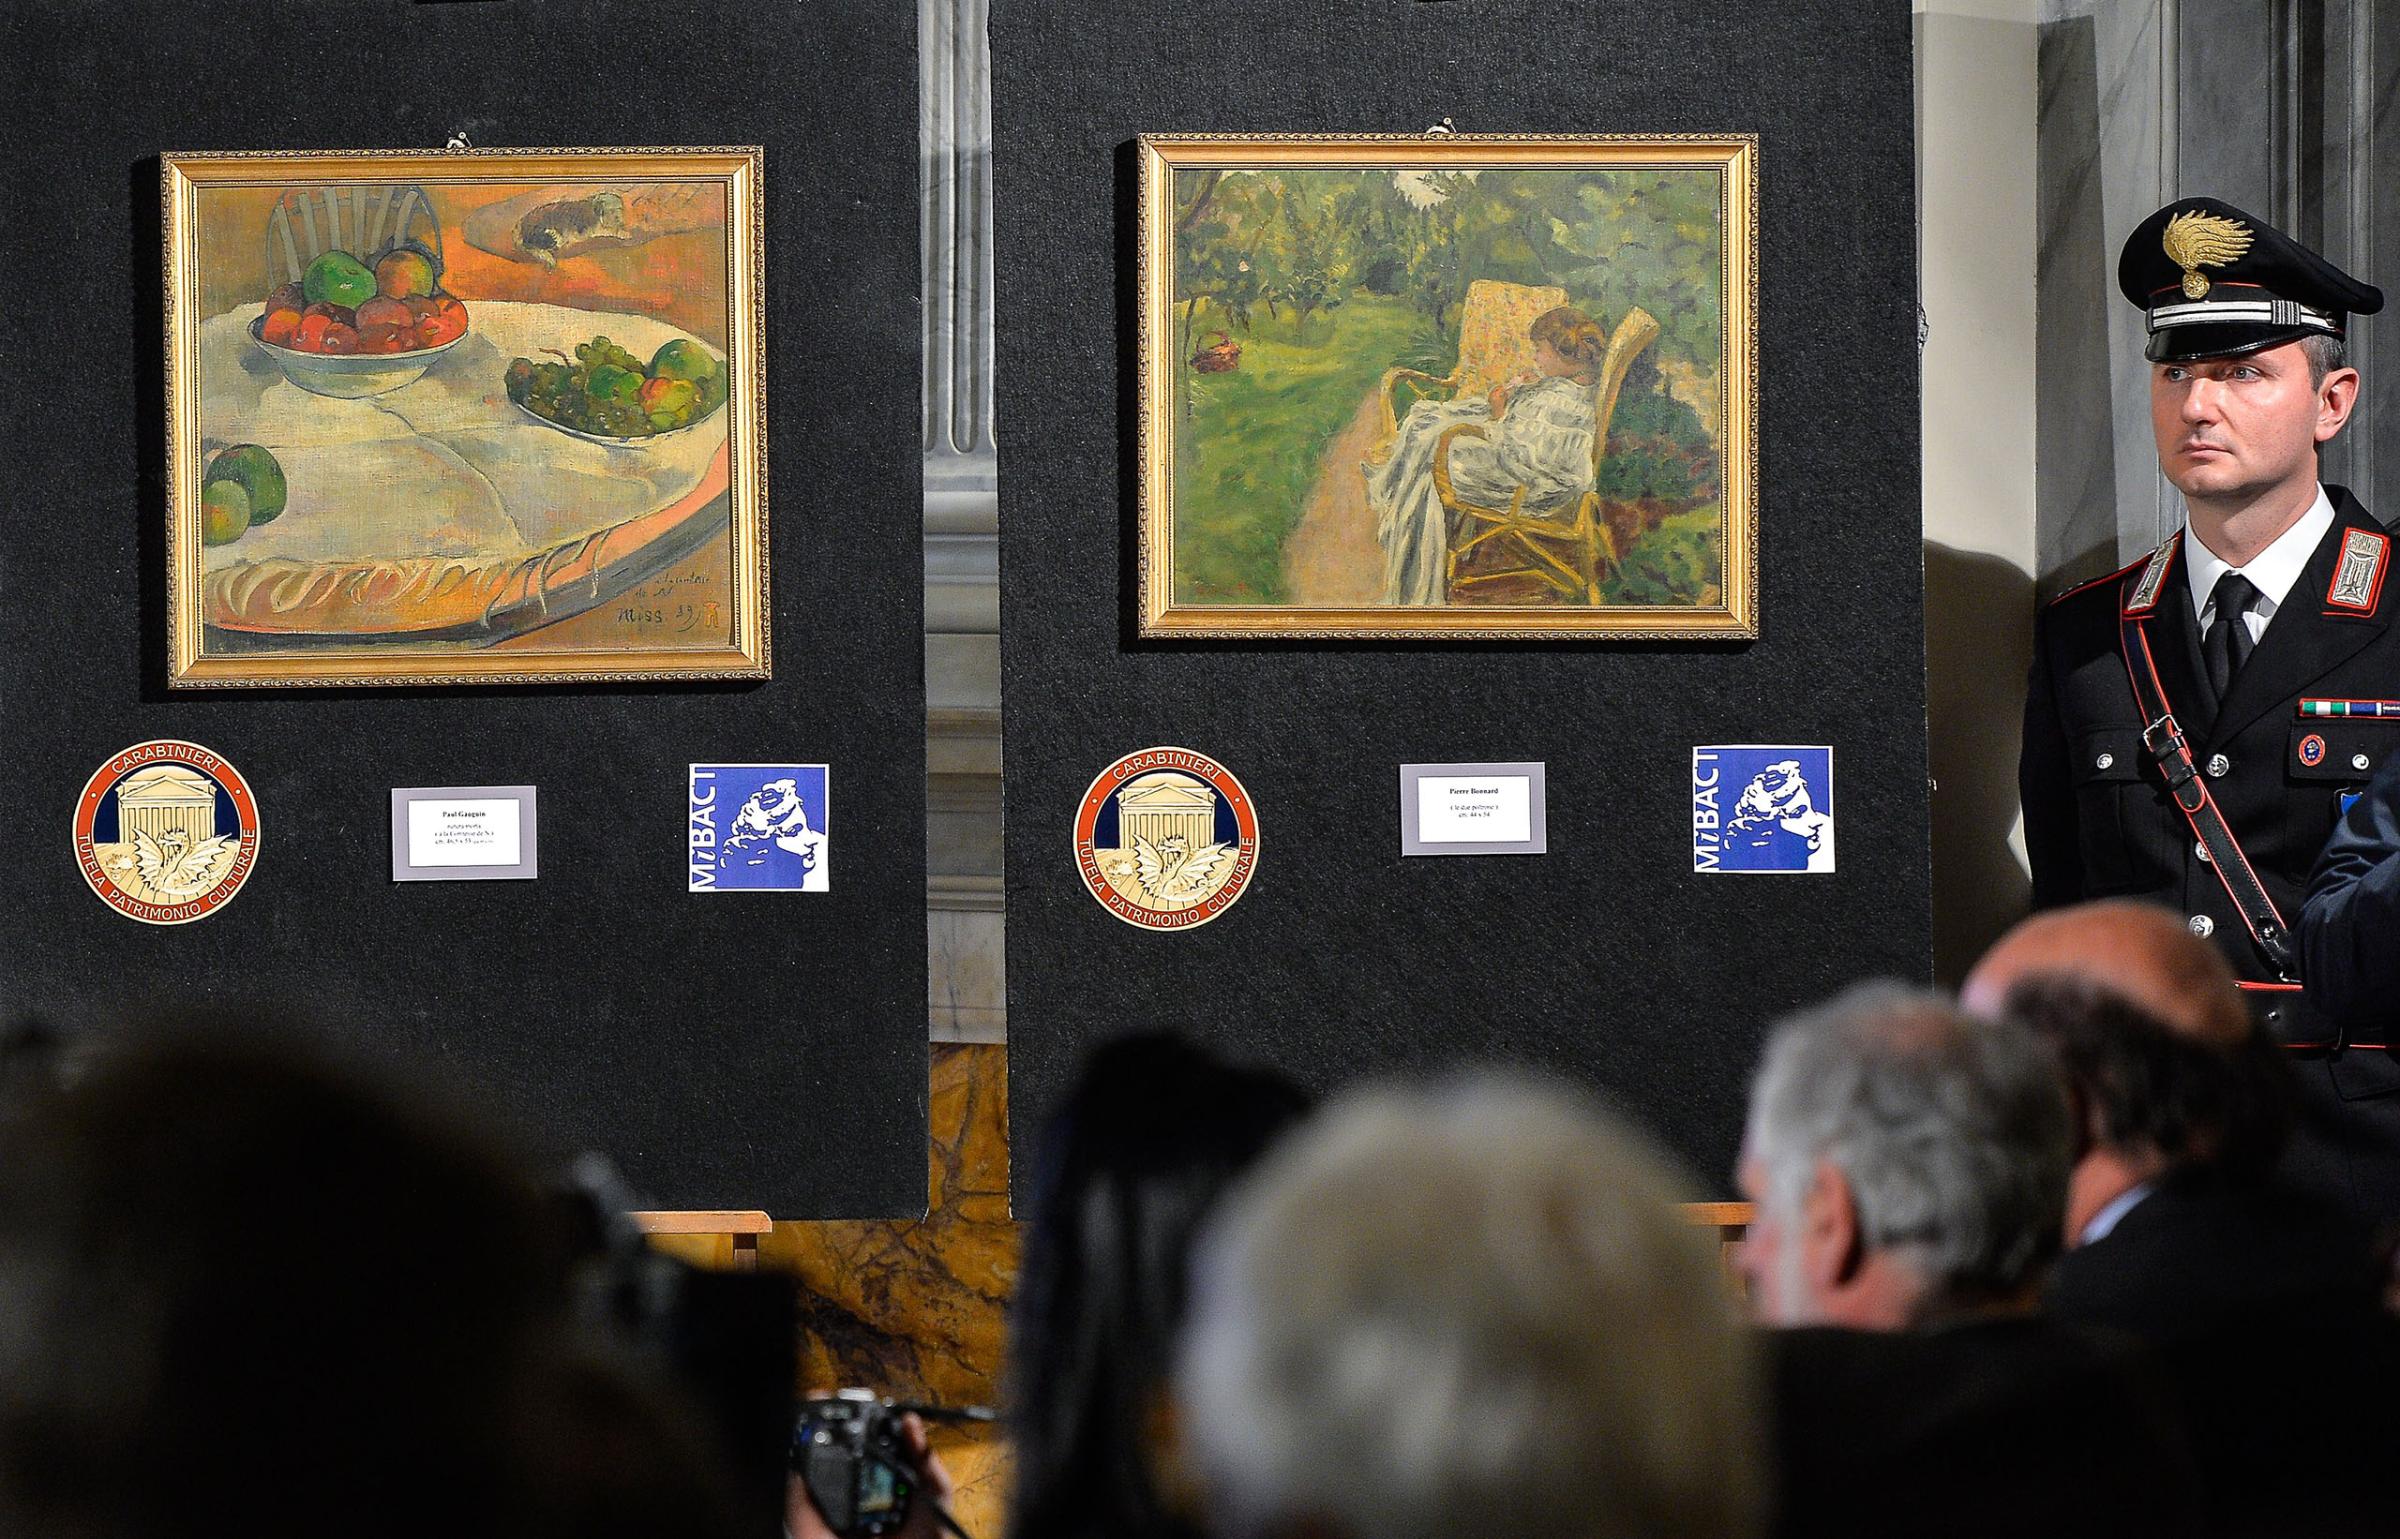 A Carabinieri stands next to the two paintings stolen in London in the 1970s, "Fruits sur une table ou nature morte au petit chien" by French artist Paul Gauguin and "La femme aux deux fauteuils" by Pierre Bonnard, on April 2, 2014.